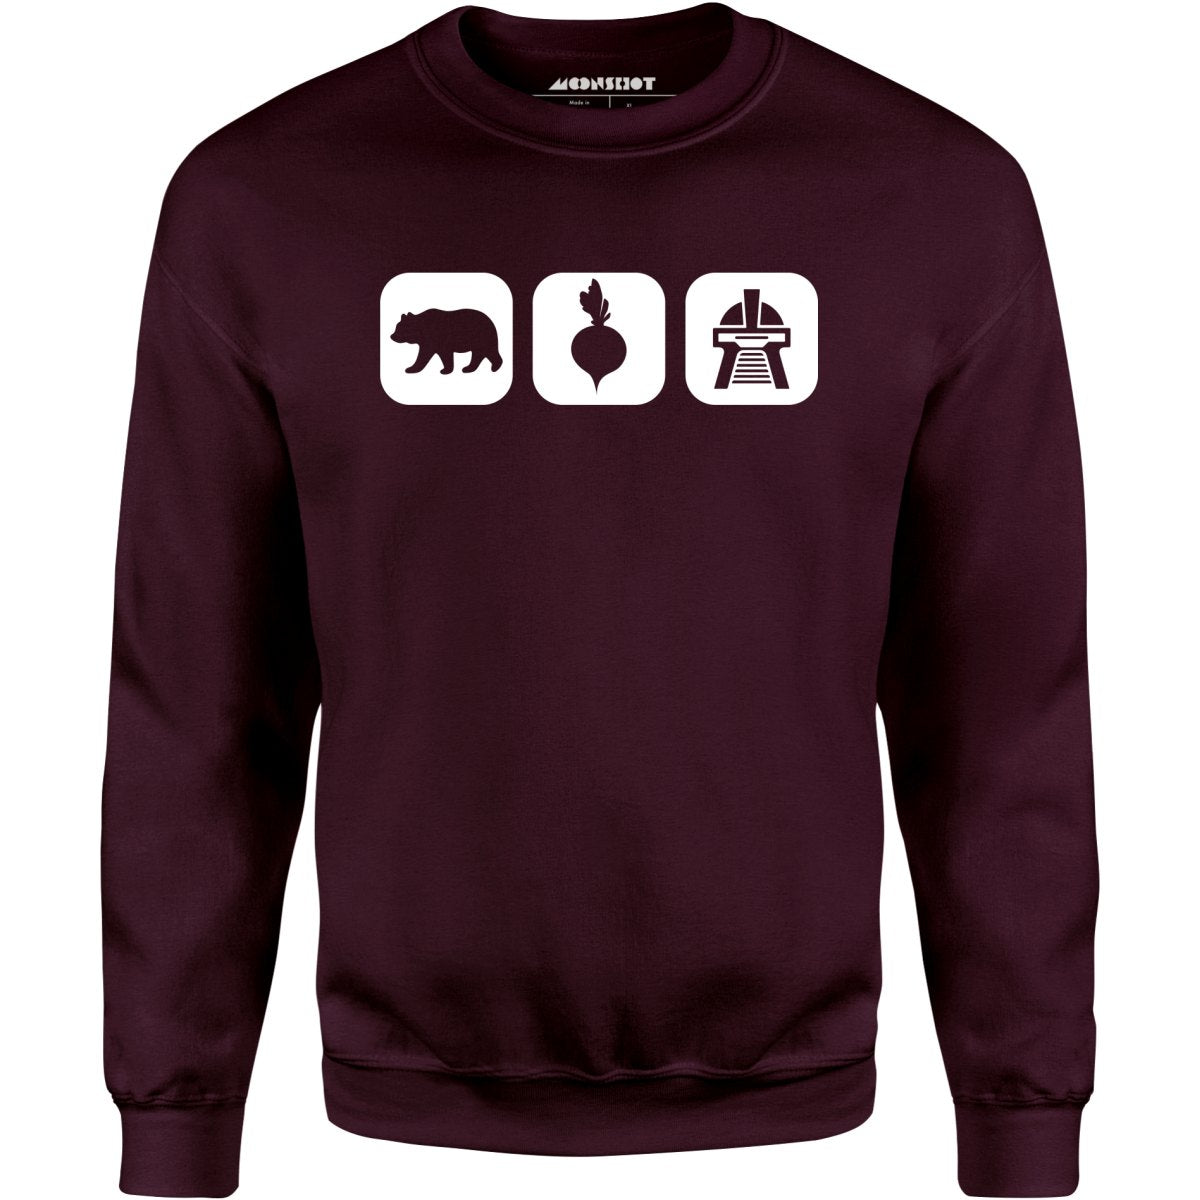 Bears Beets Battlestar Galactica v2 - Unisex Sweatshirt